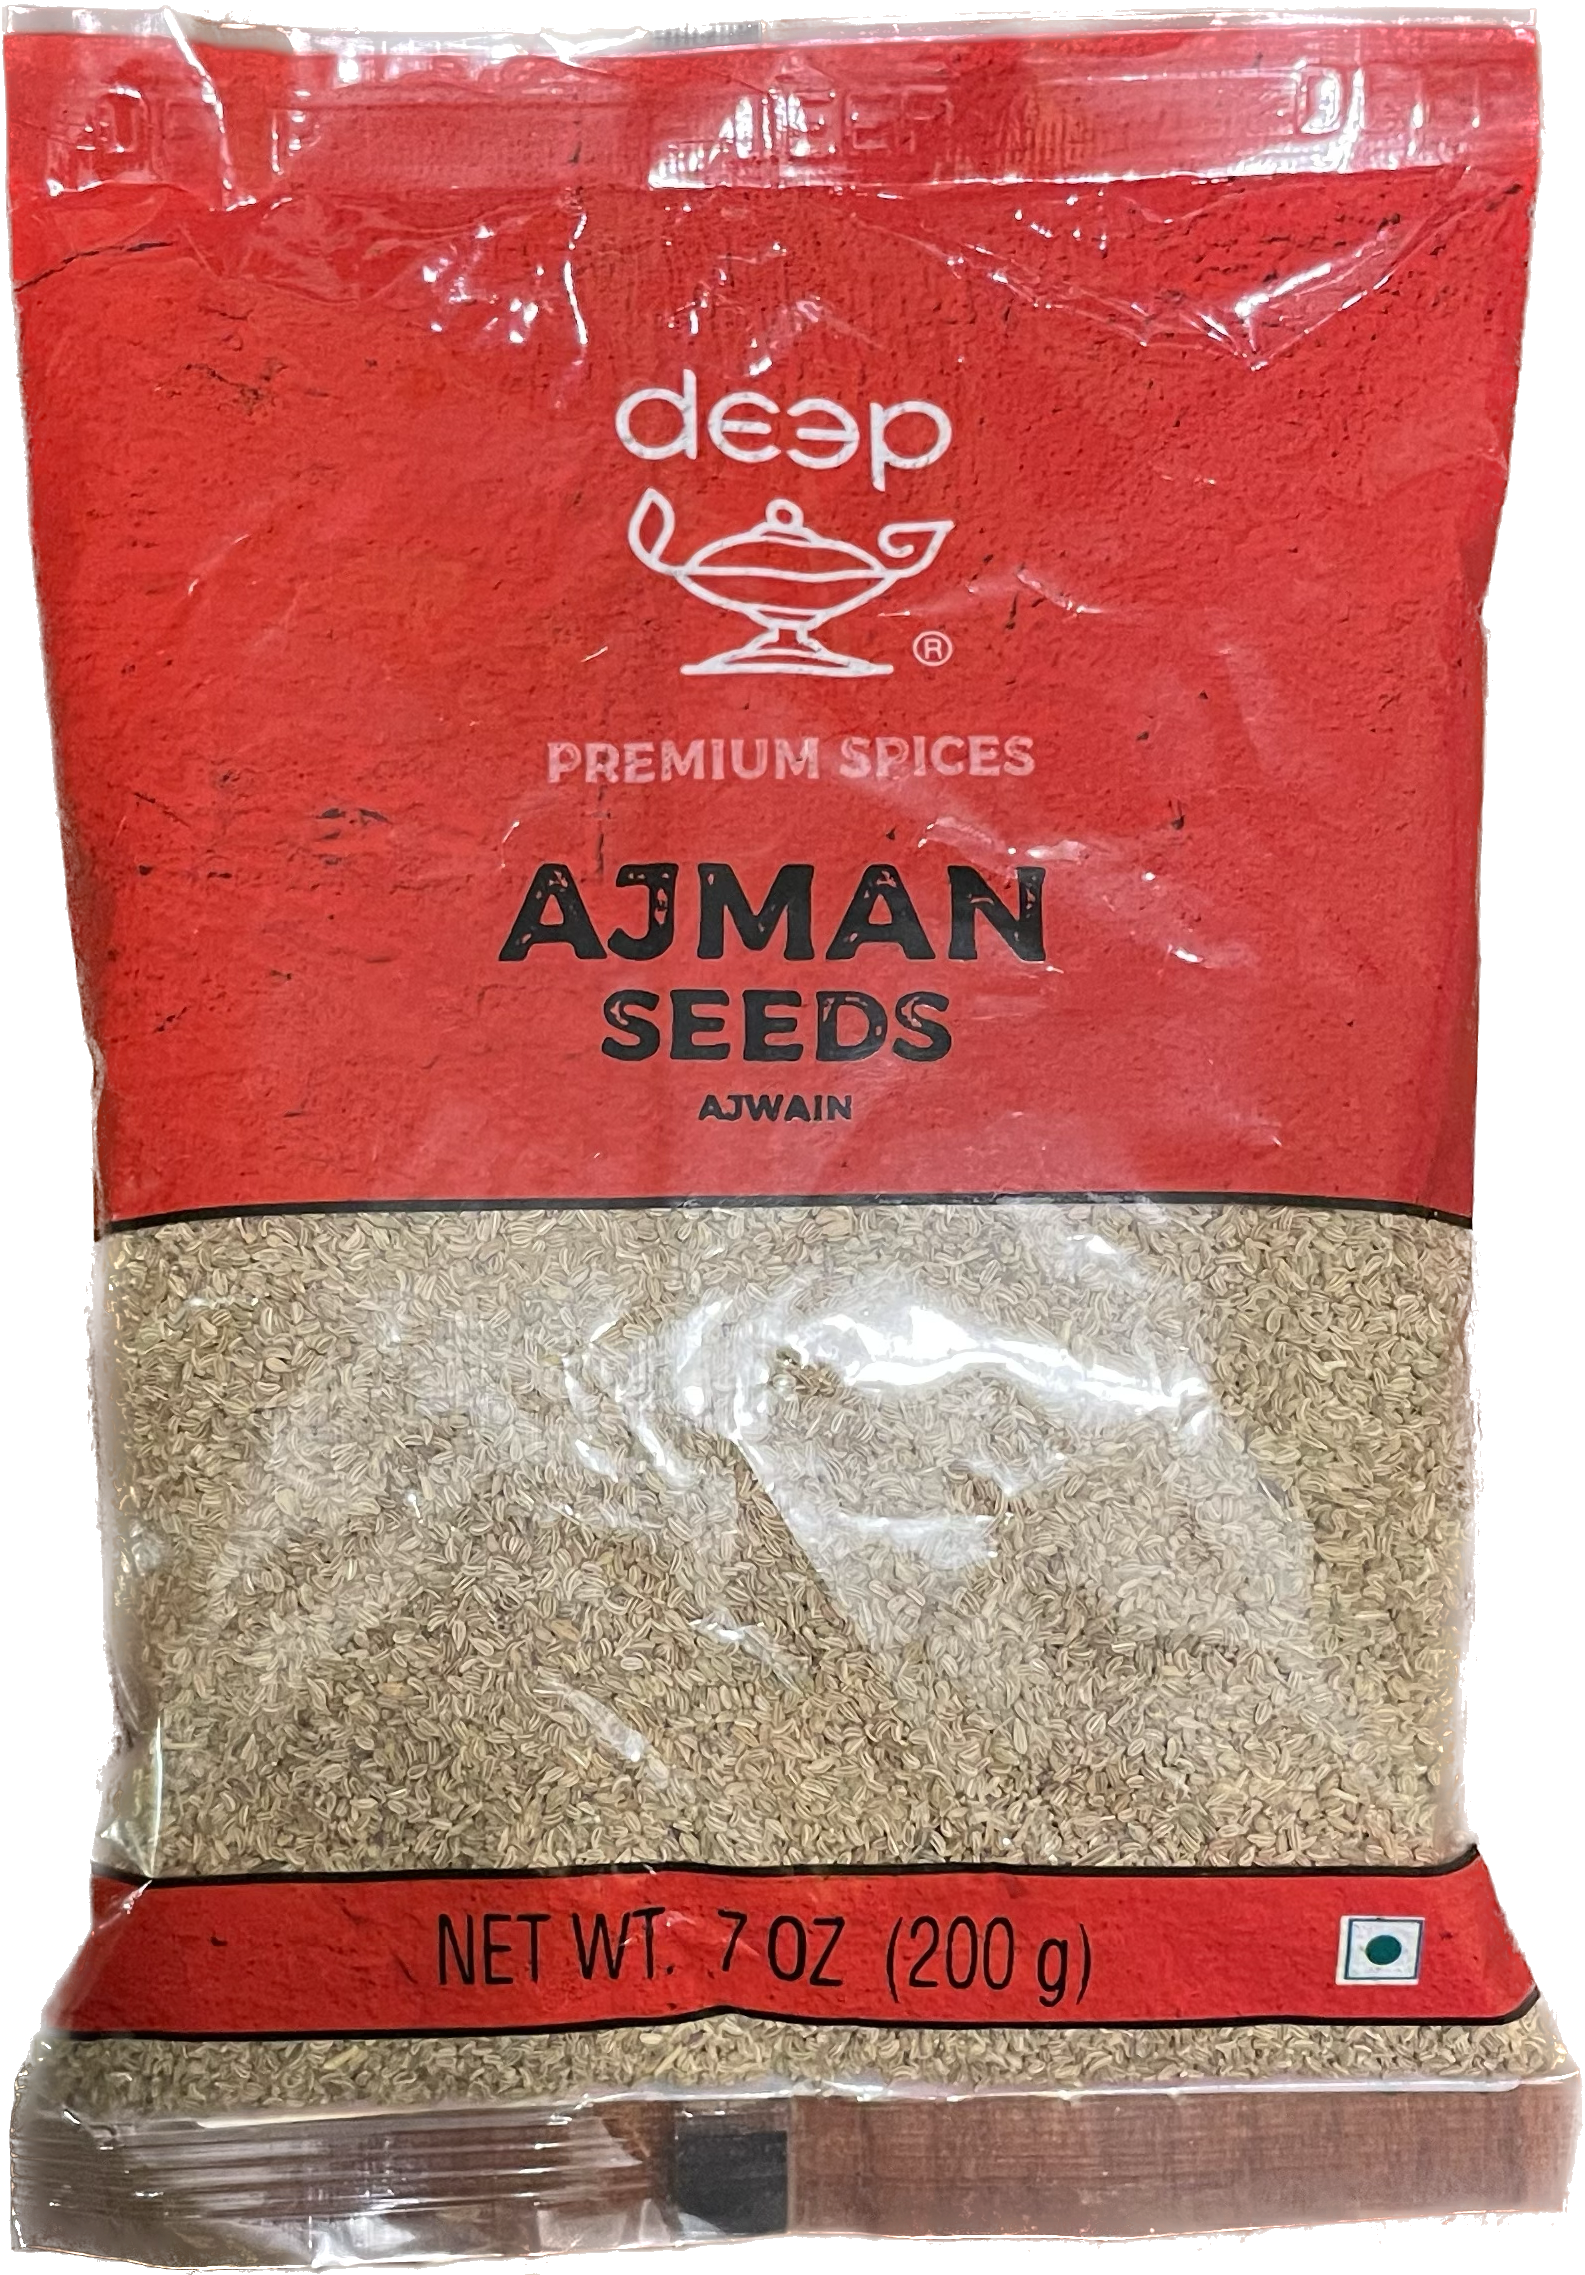 Deep Ajwain Seeds, 200 g